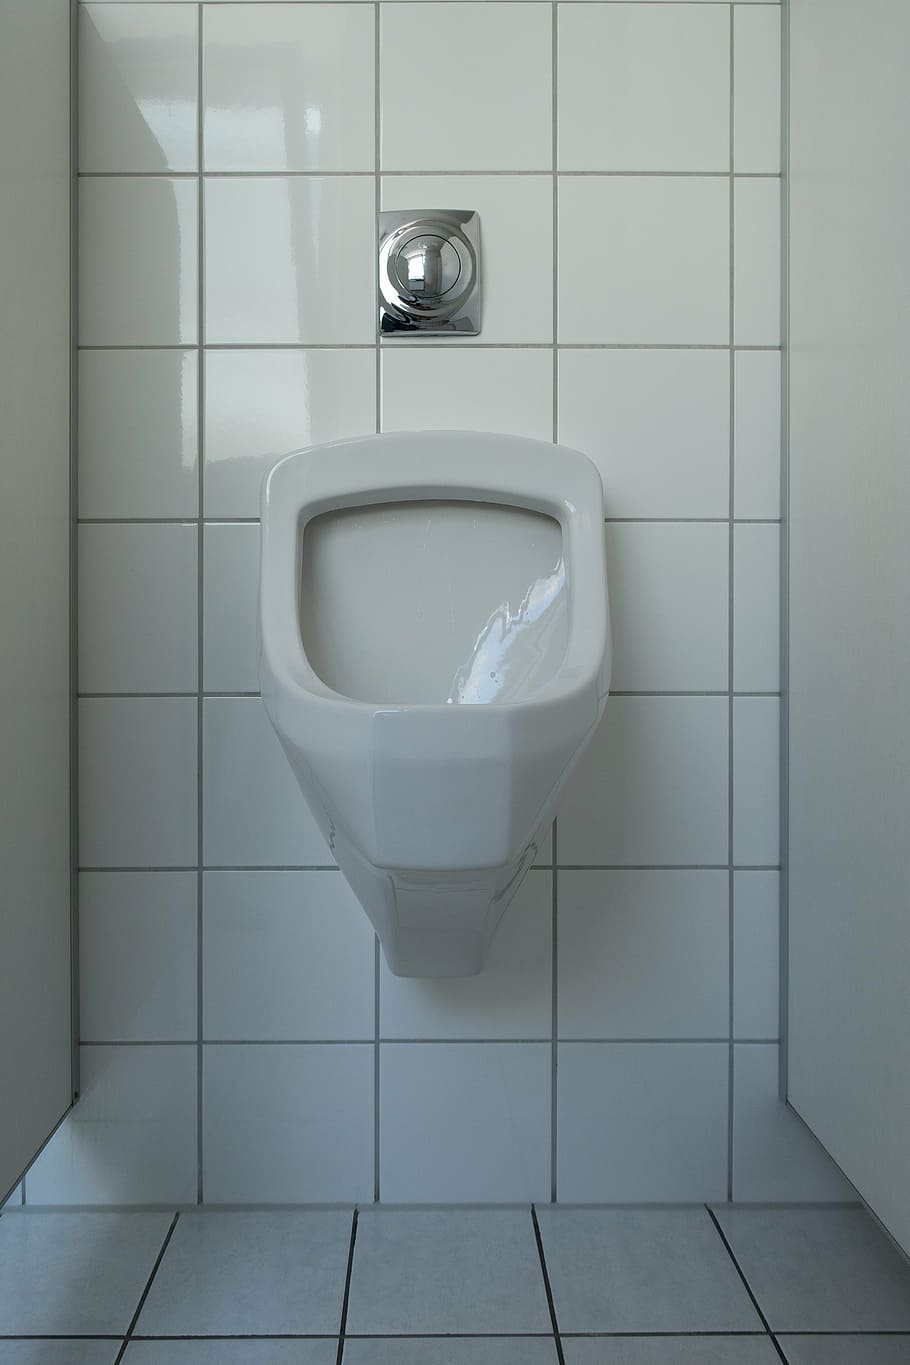 empty, white, ceramic, urinal, wc, man toilet, toilet, loo, slabs, wall tiling